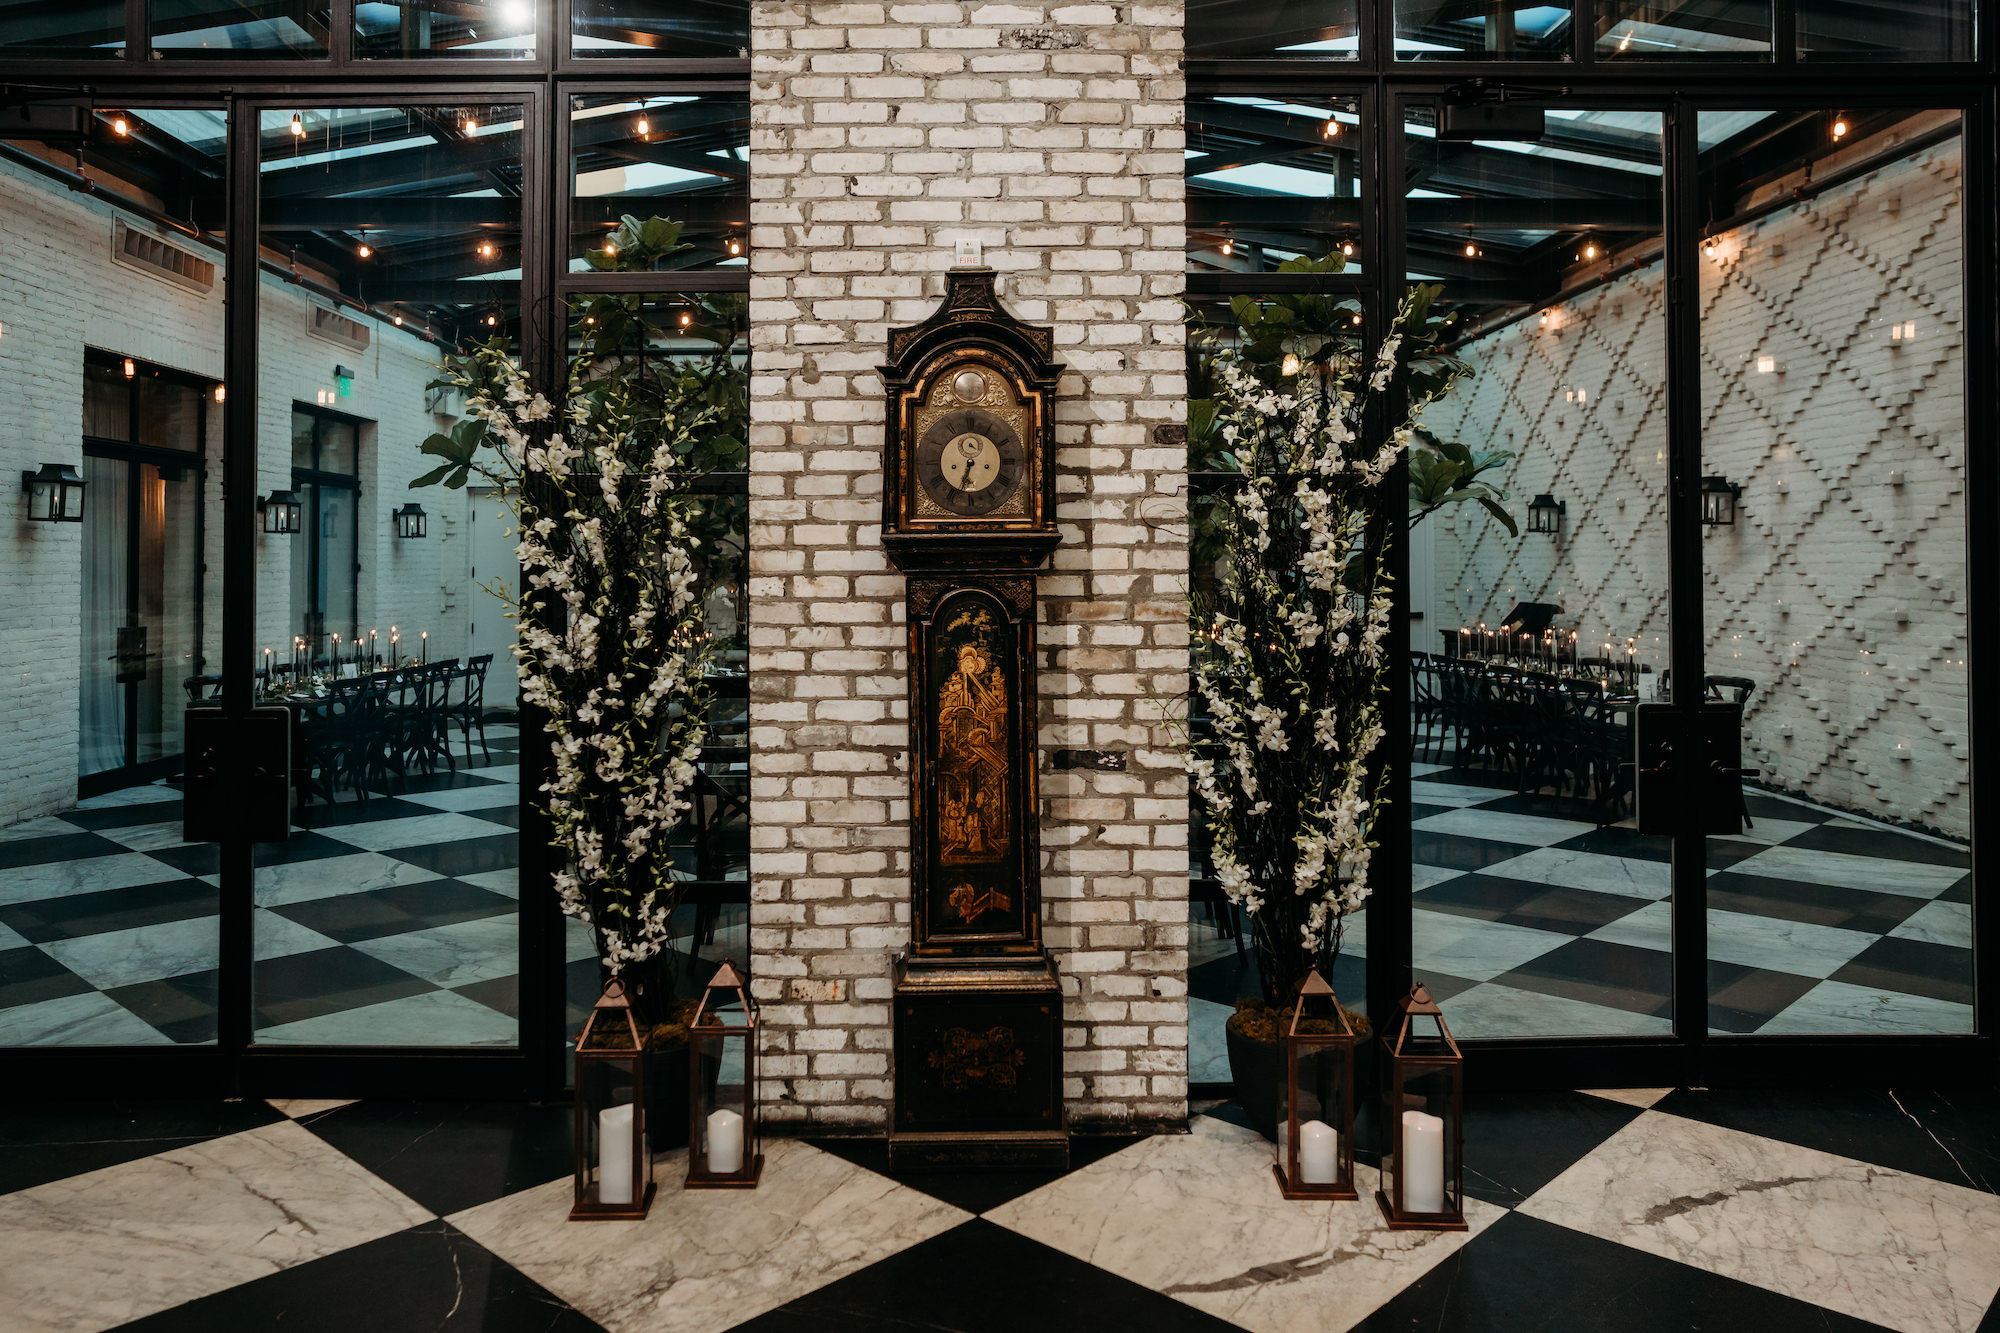 Timeless Indoor Wedding Ceremony with Checkered Floor | Venue Oxford Exchange